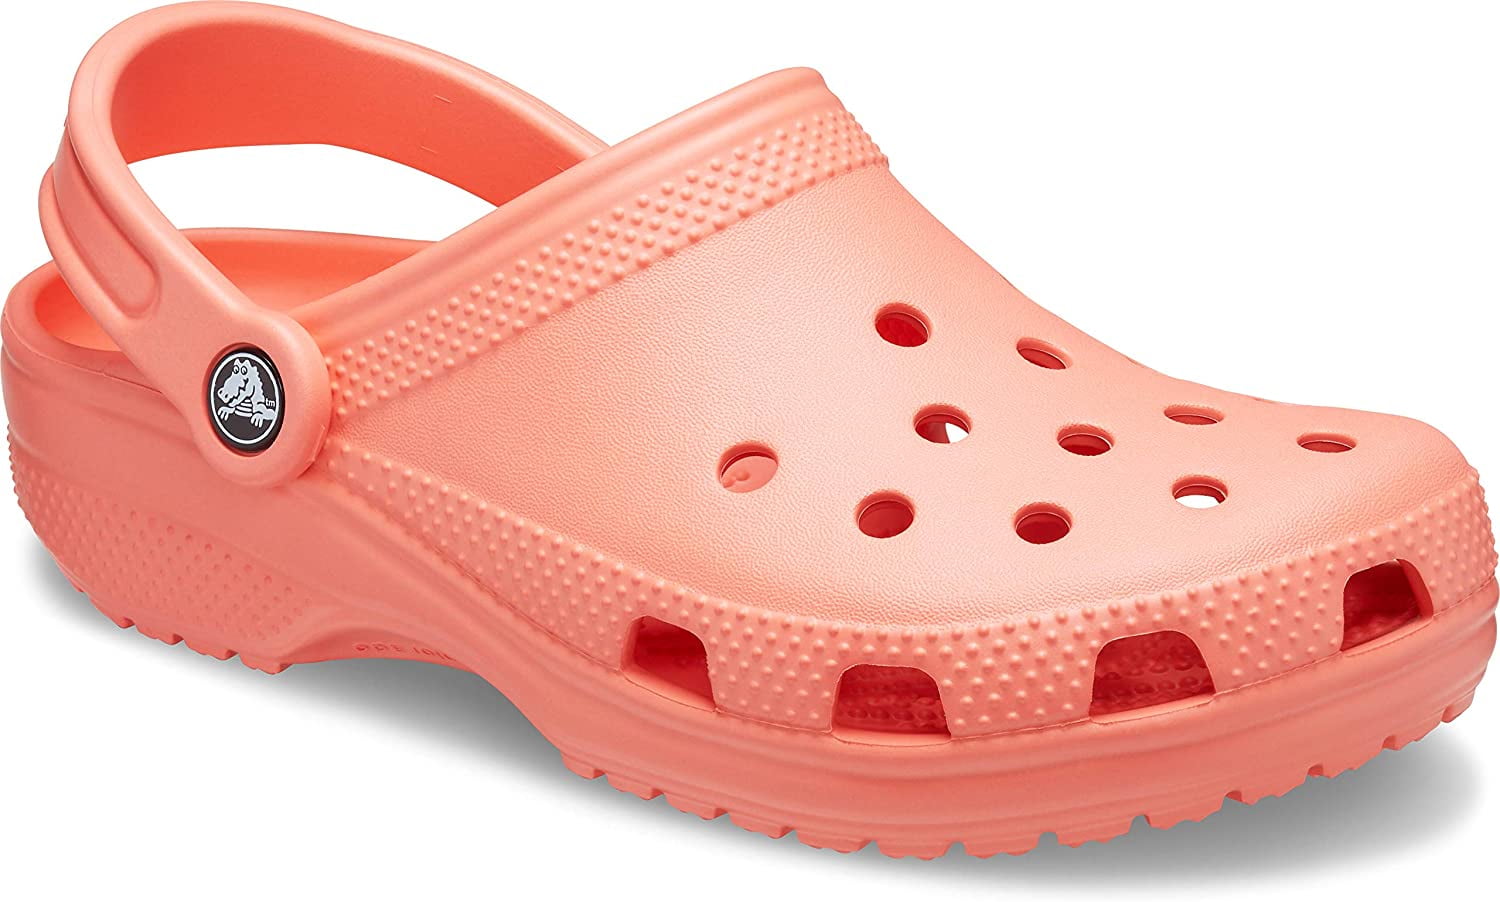 Unisex Ladies & Mens Slip On Synthetic Crocs Summer Sandals Beach 